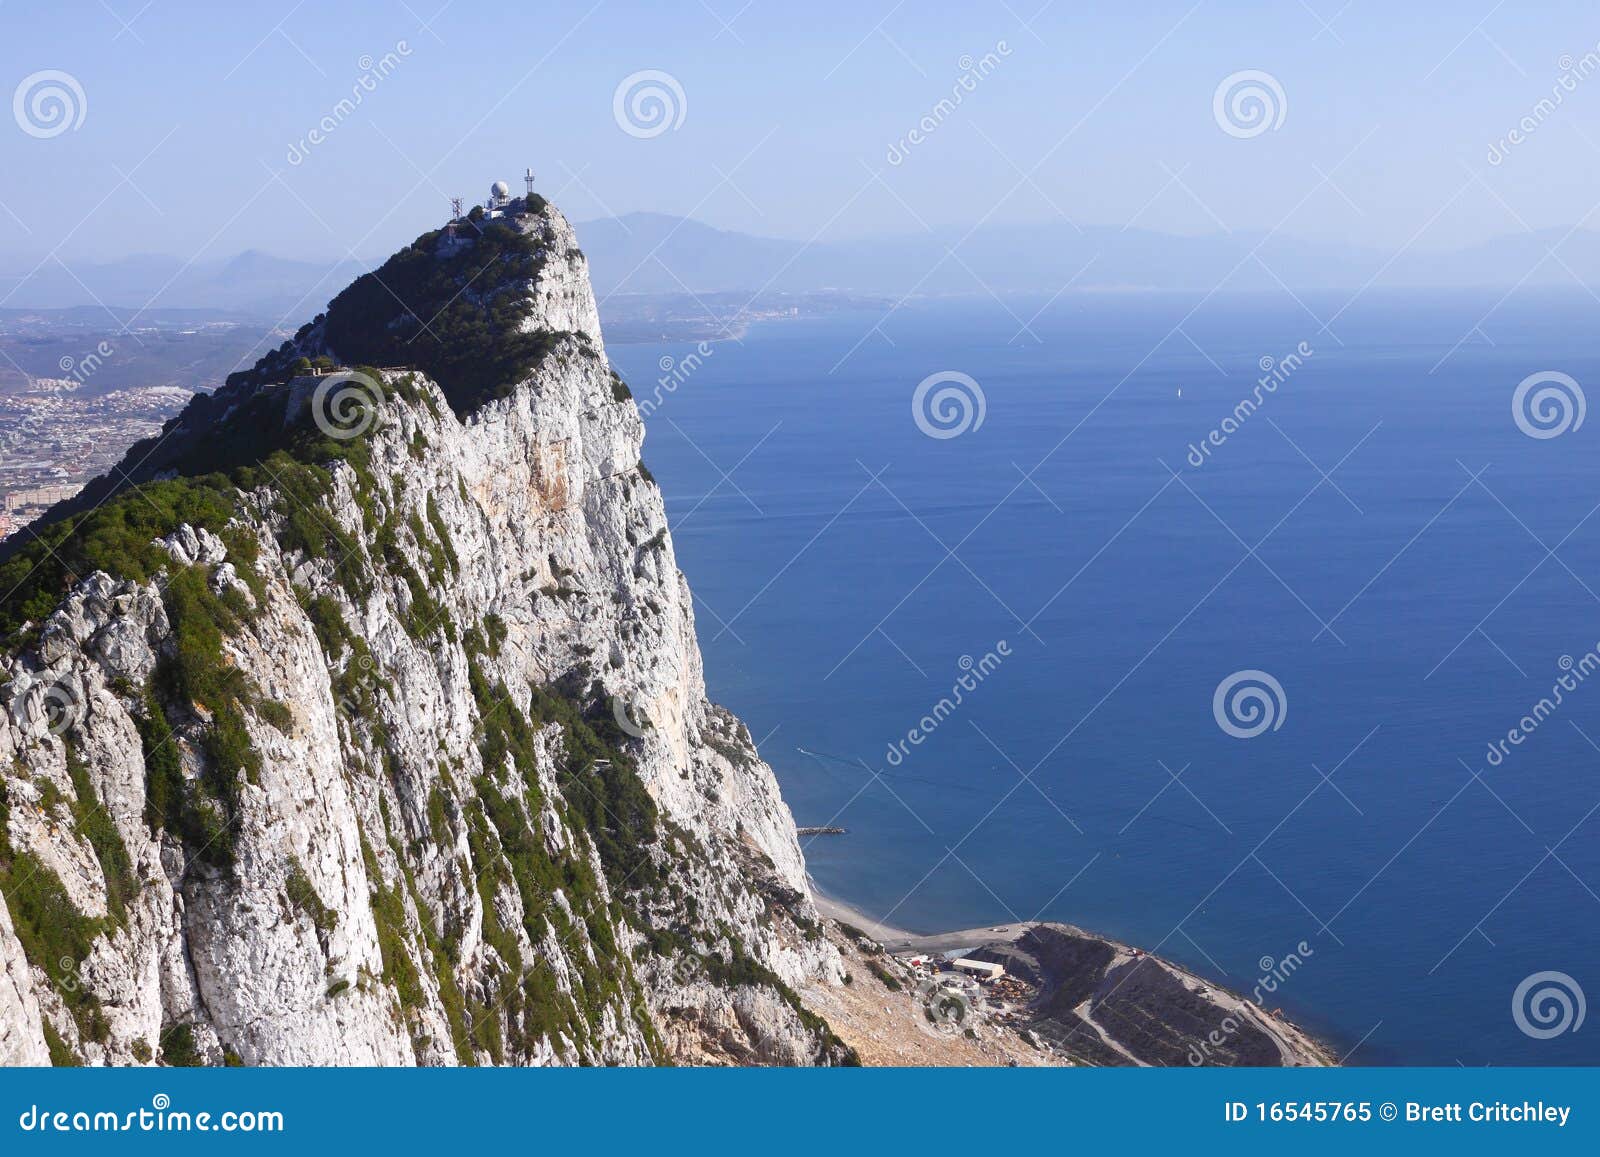 rock of gibraltar vista